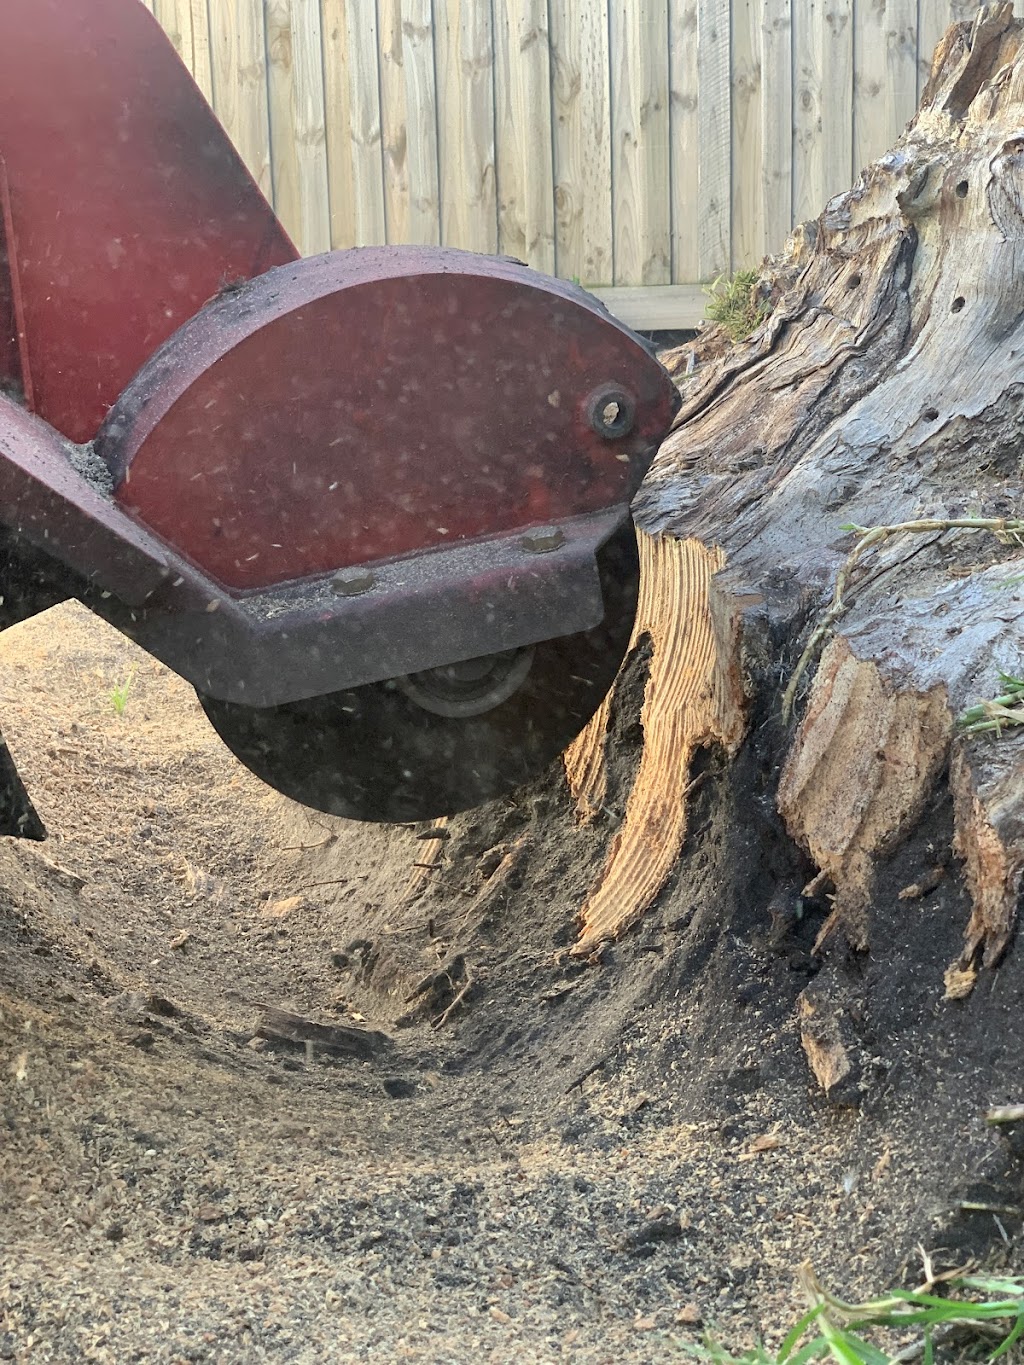 Bayview Stump Removal |  | 3a Balcombe Park Ln, Beaumaris VIC 3193, Australia | 0415391512 OR +61 415 391 512